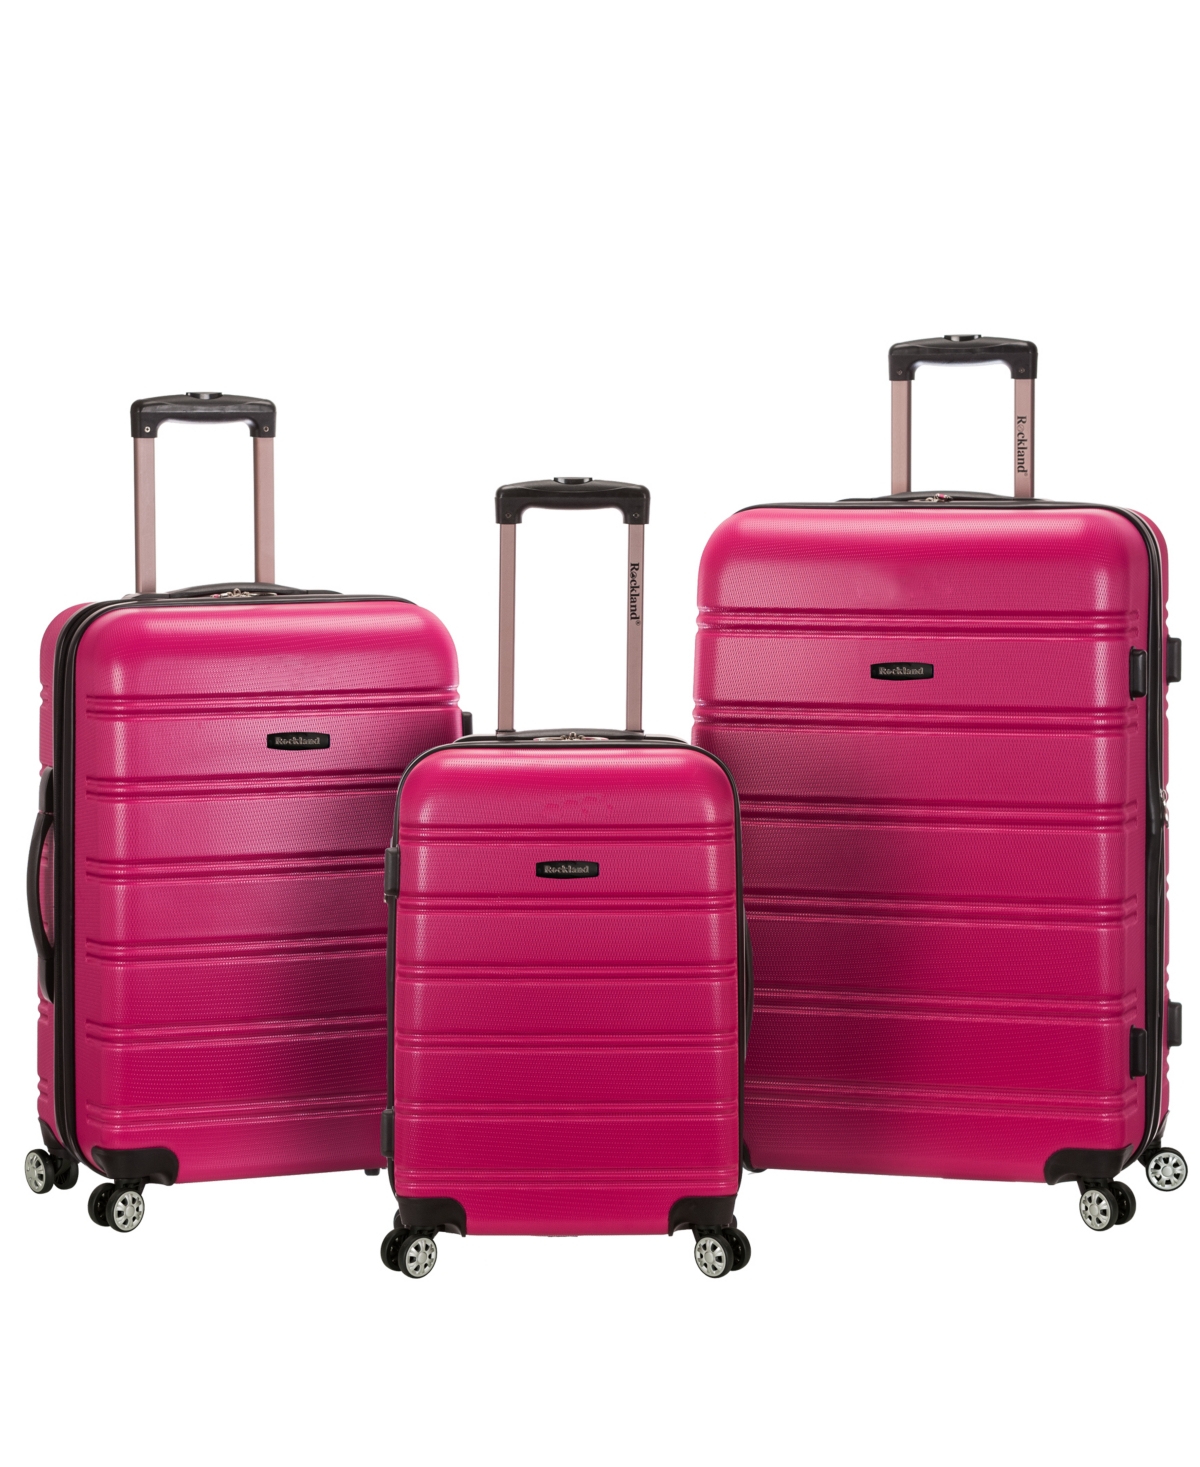 Melbourne 3-Pc. Hardside Luggage Set - Mint and Pink